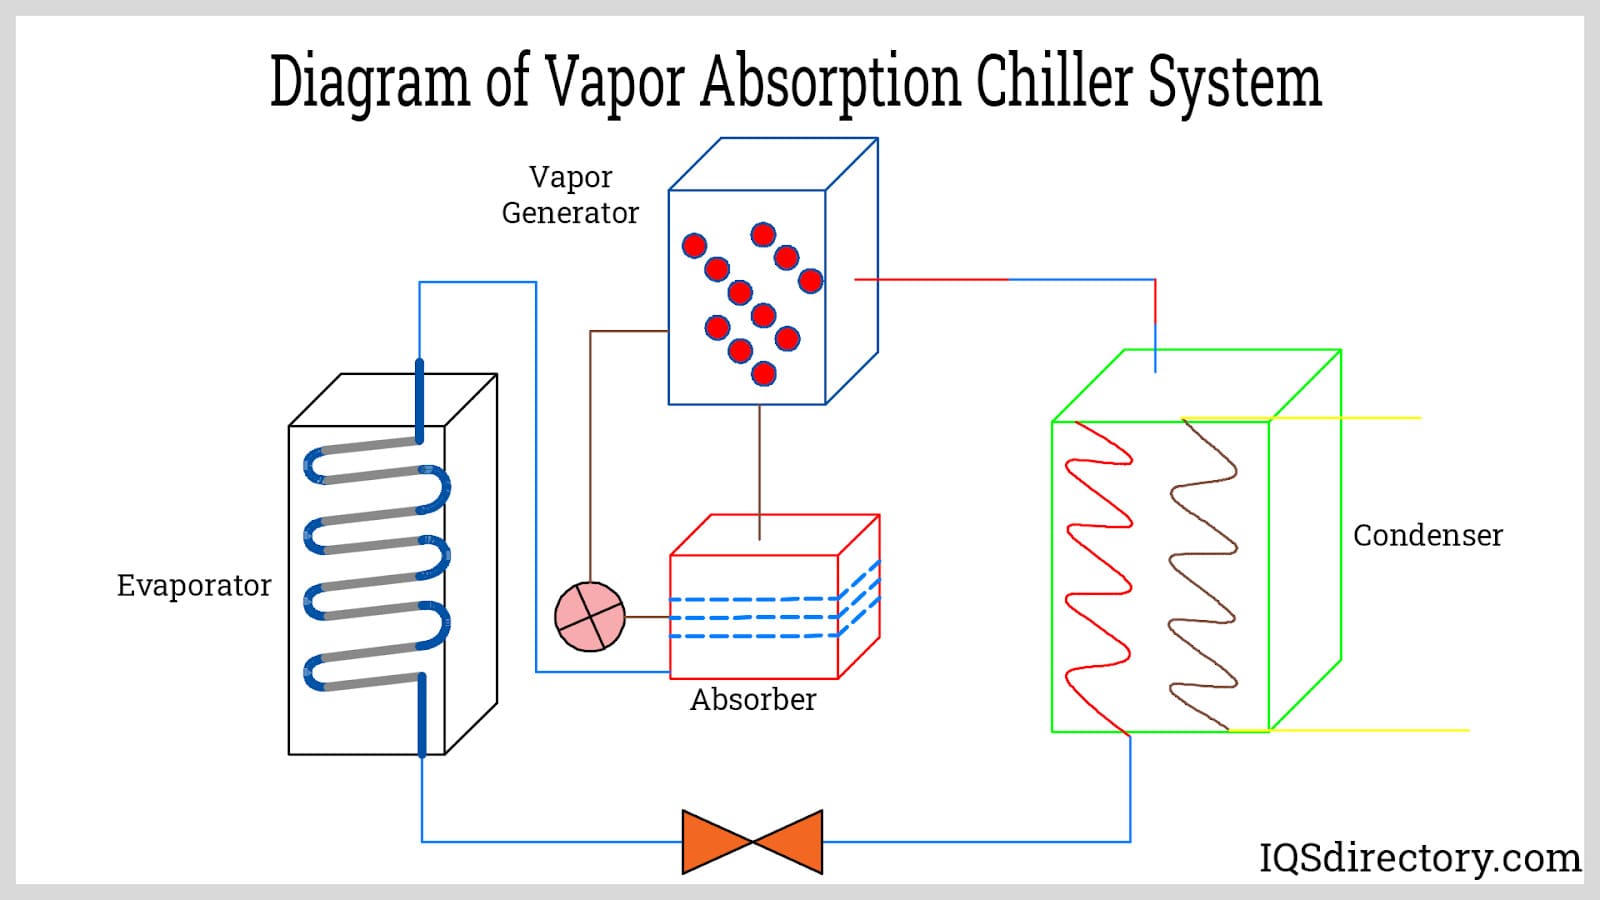 Diagram of Vapor Absorption Chiller System